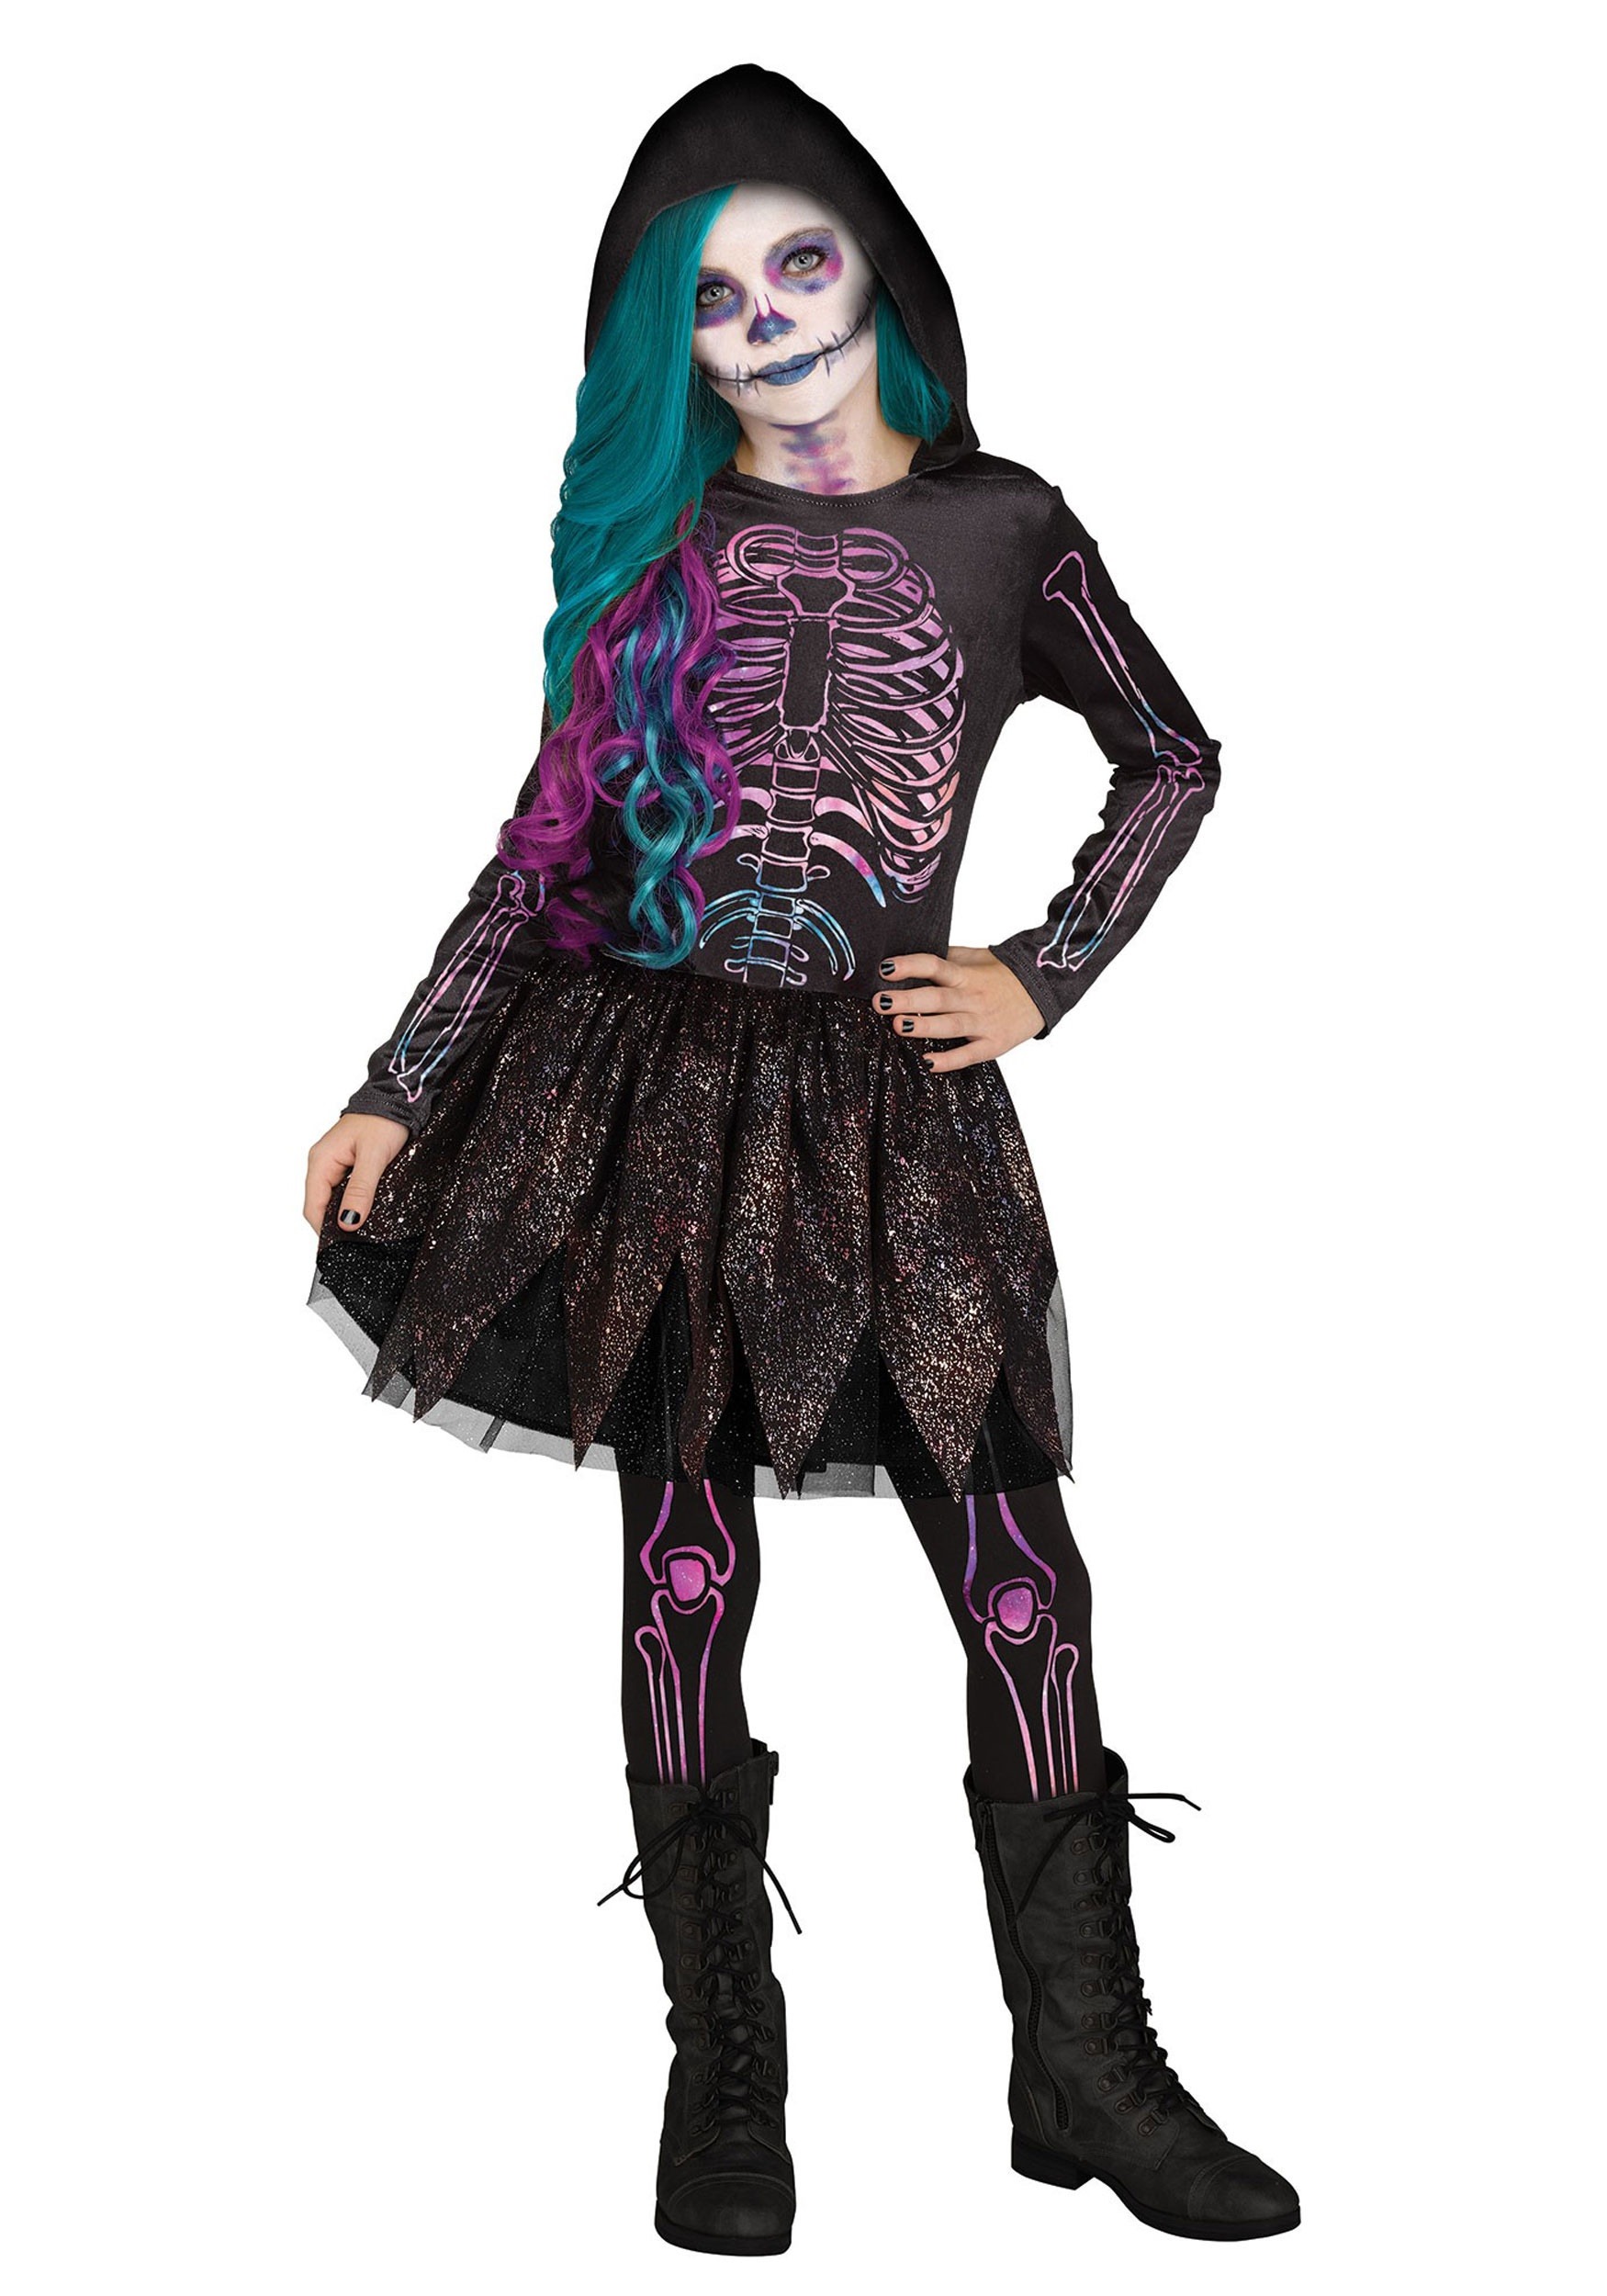 Photos - Fancy Dress Galaxy Fun World  Skeleton Girl's Costume Black/Purple FU112732 